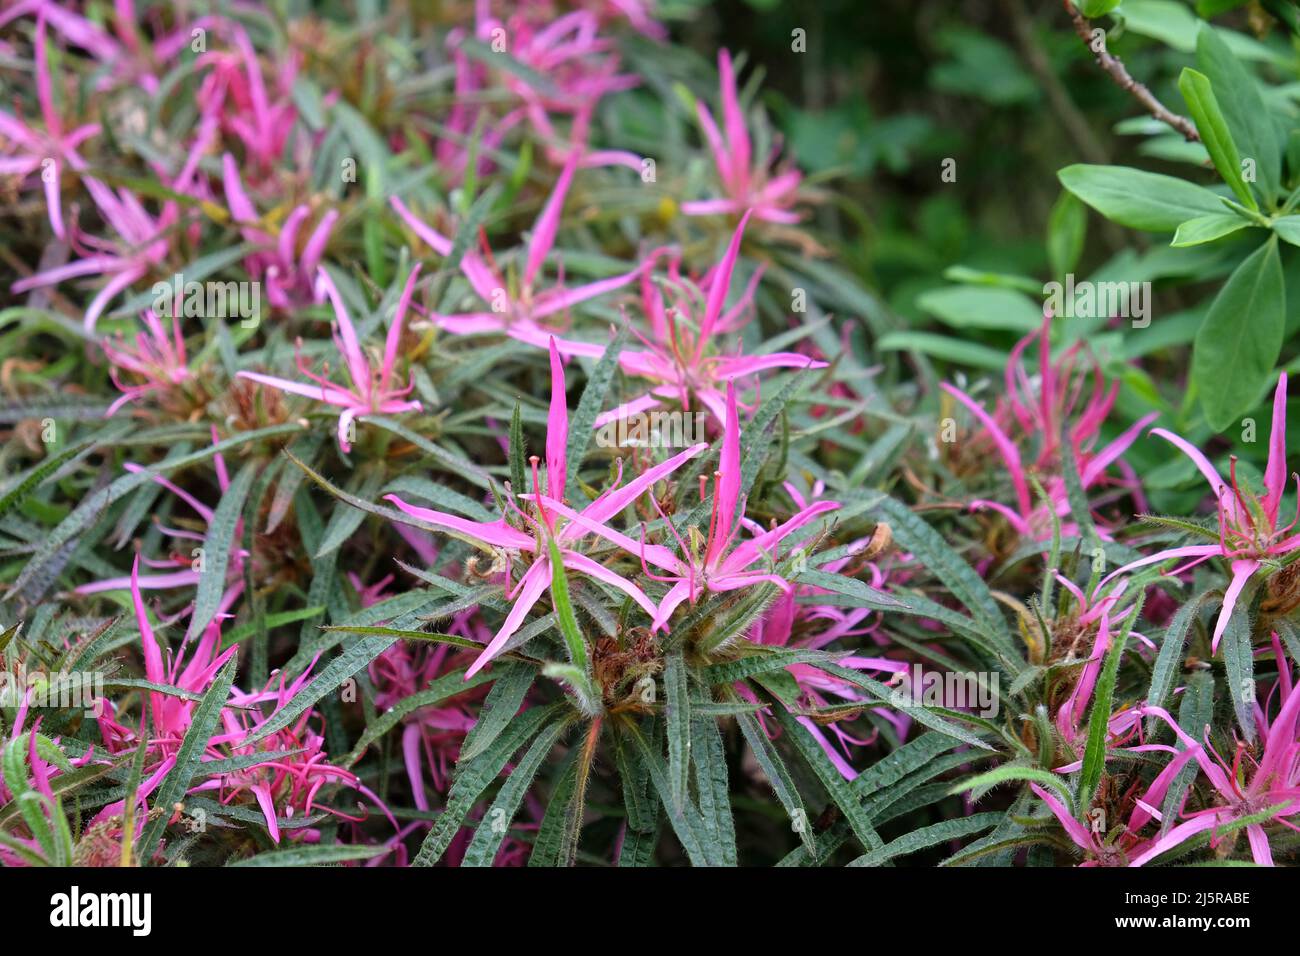 The delicate flowers of the  Azalea japonica ÔStar StyleÕ Stock Photo